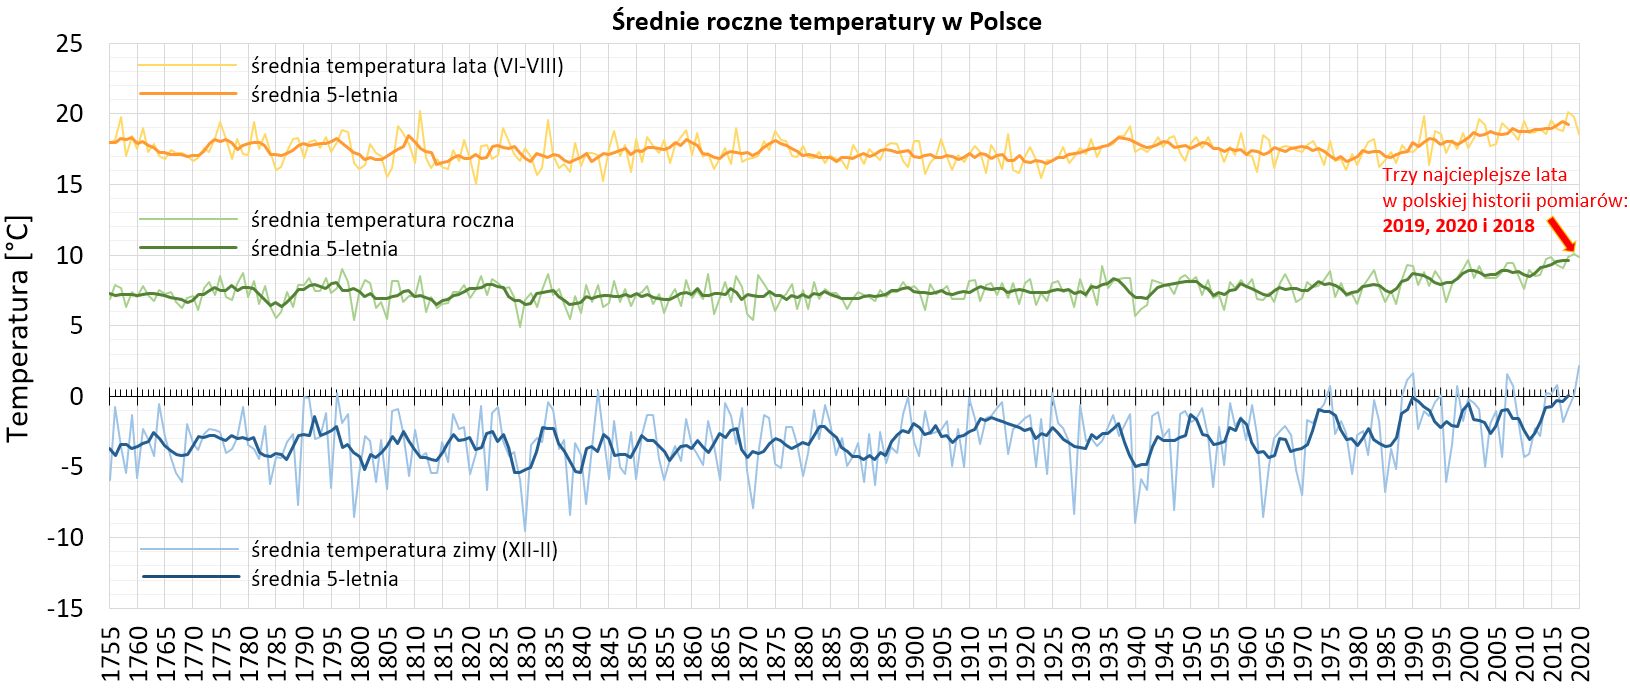 Wykres:  Zmiany temperatury na terytorium Polski